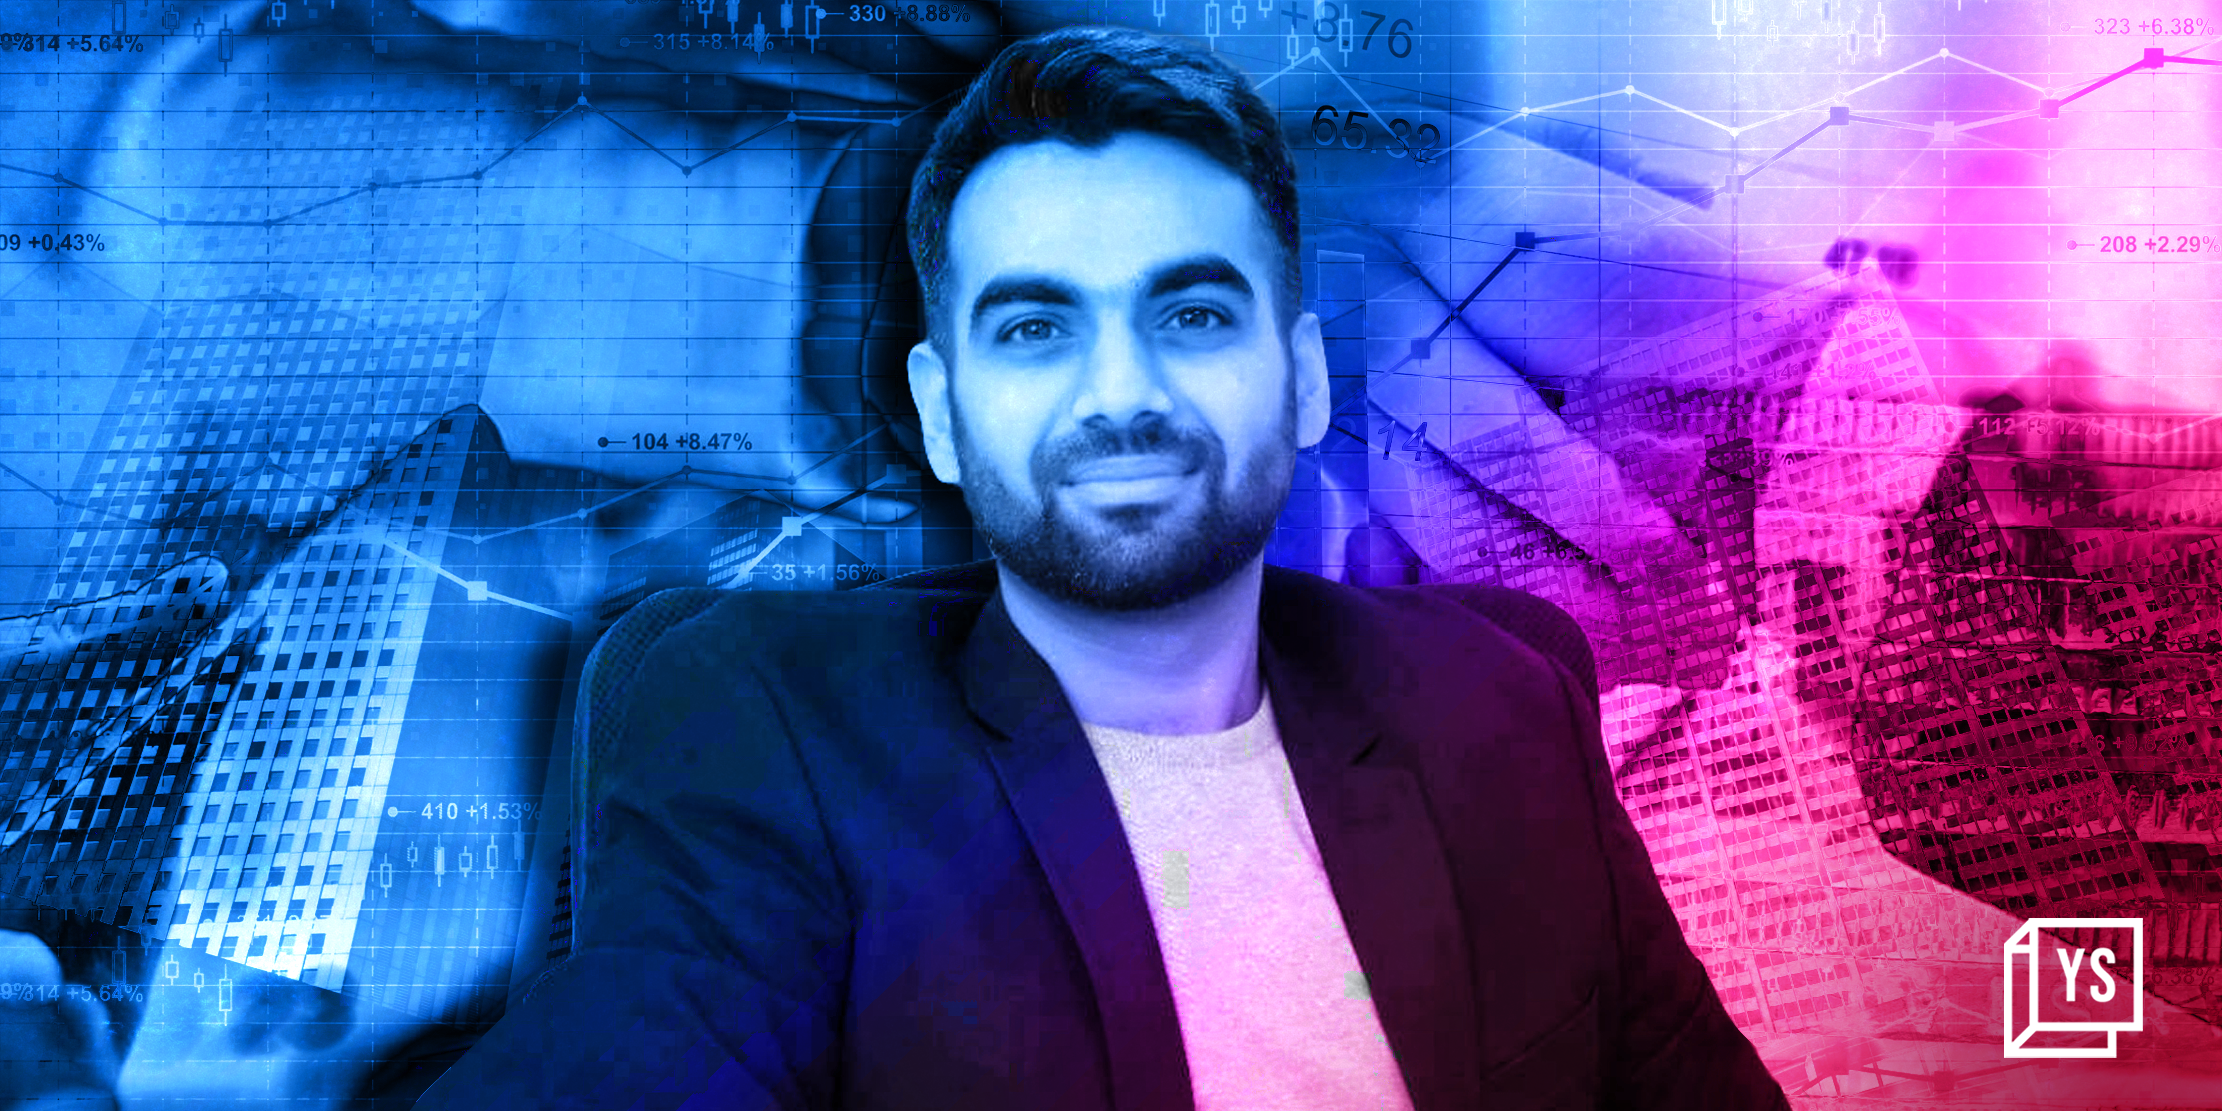 [YS Exclusive] Meet Aseem Ghavri, Ashneer Grover’s secret co-founder at Third Unicorn